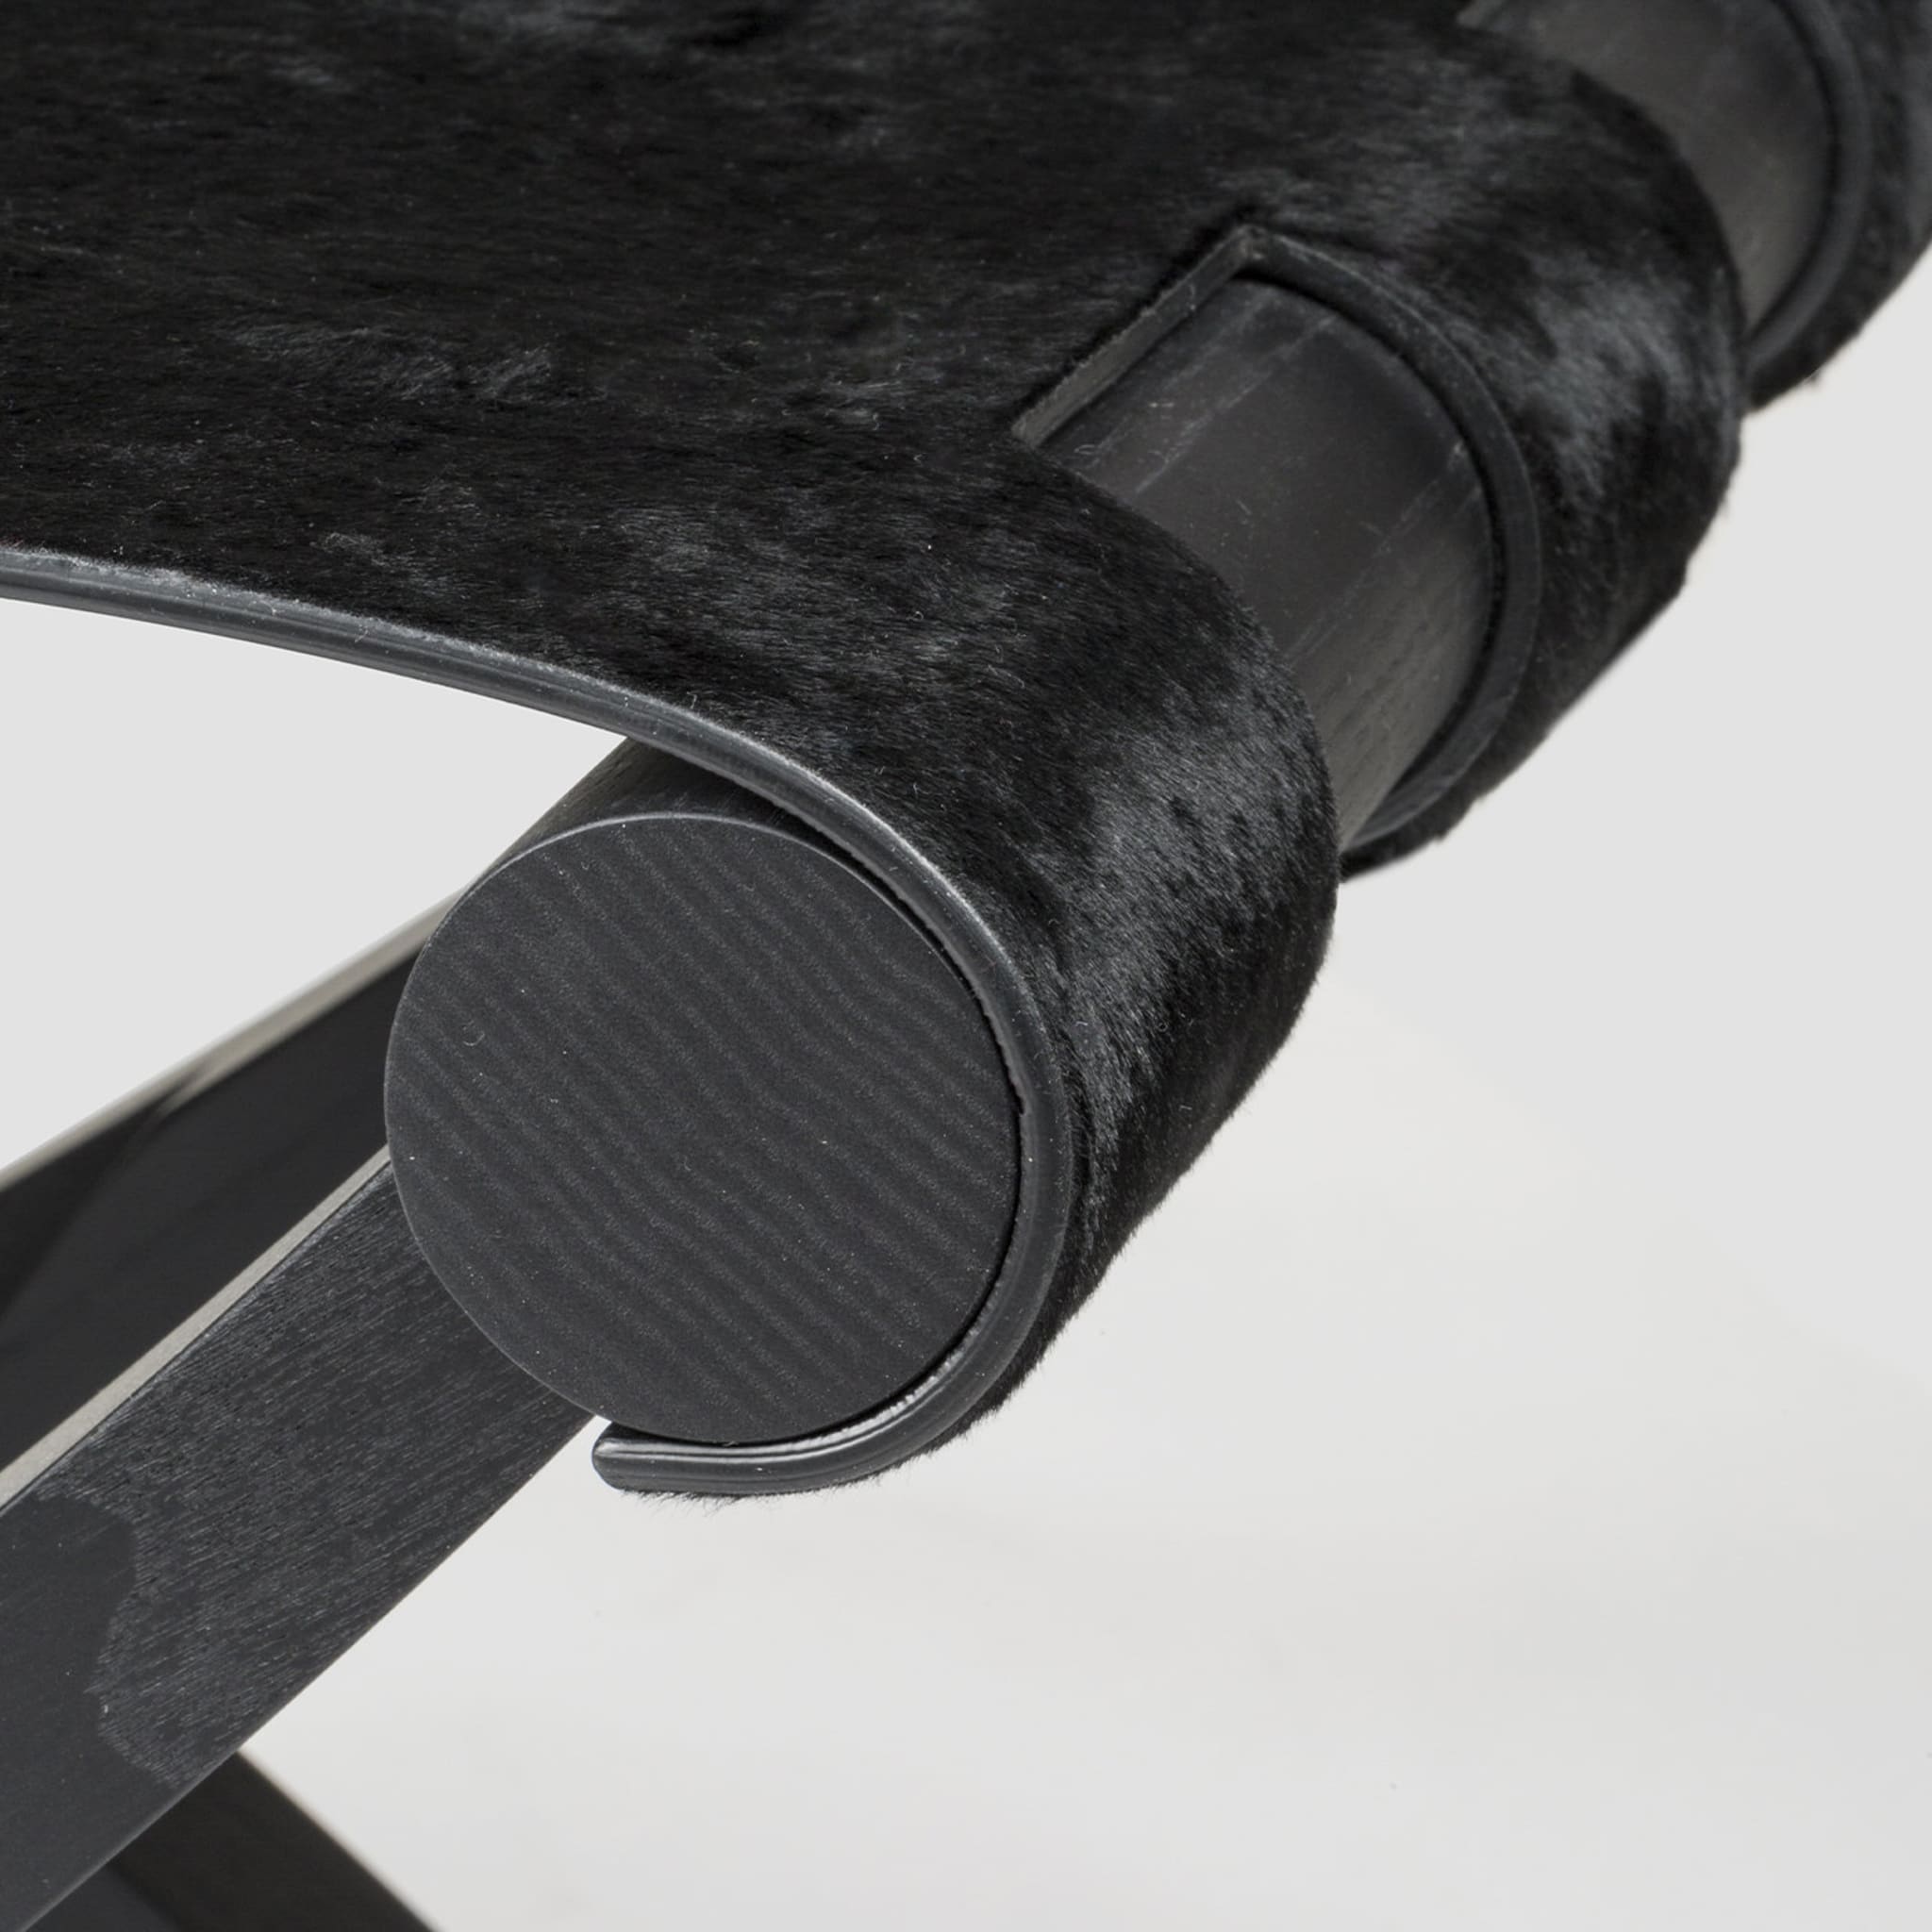 Arturo Black Folding Stool/Luggage Rack - Alternative view 1